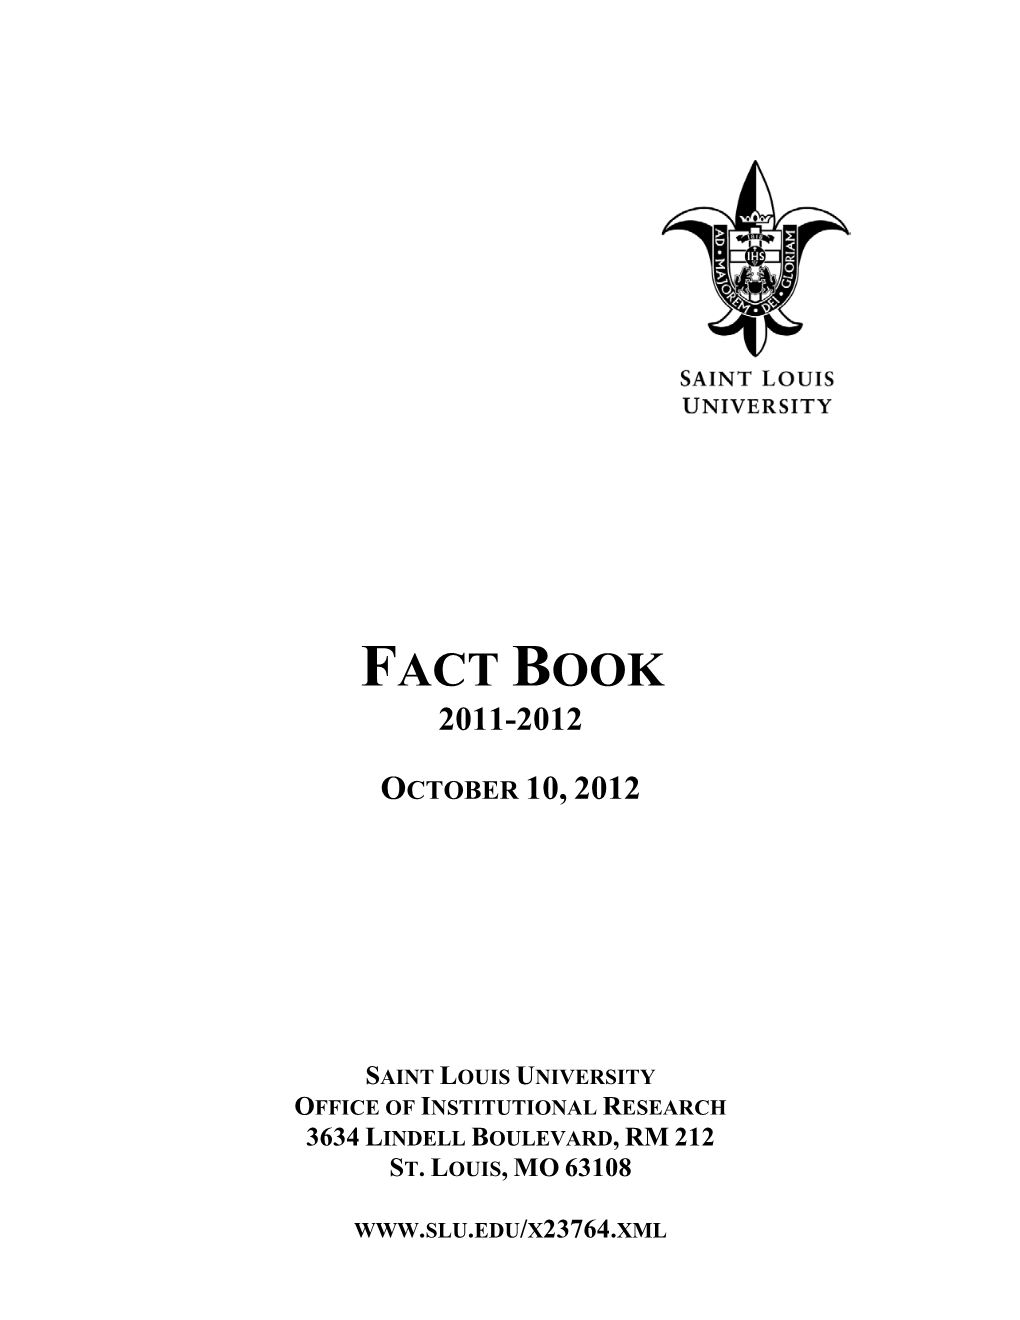 Saint Louis University Fact Book 2011-2012